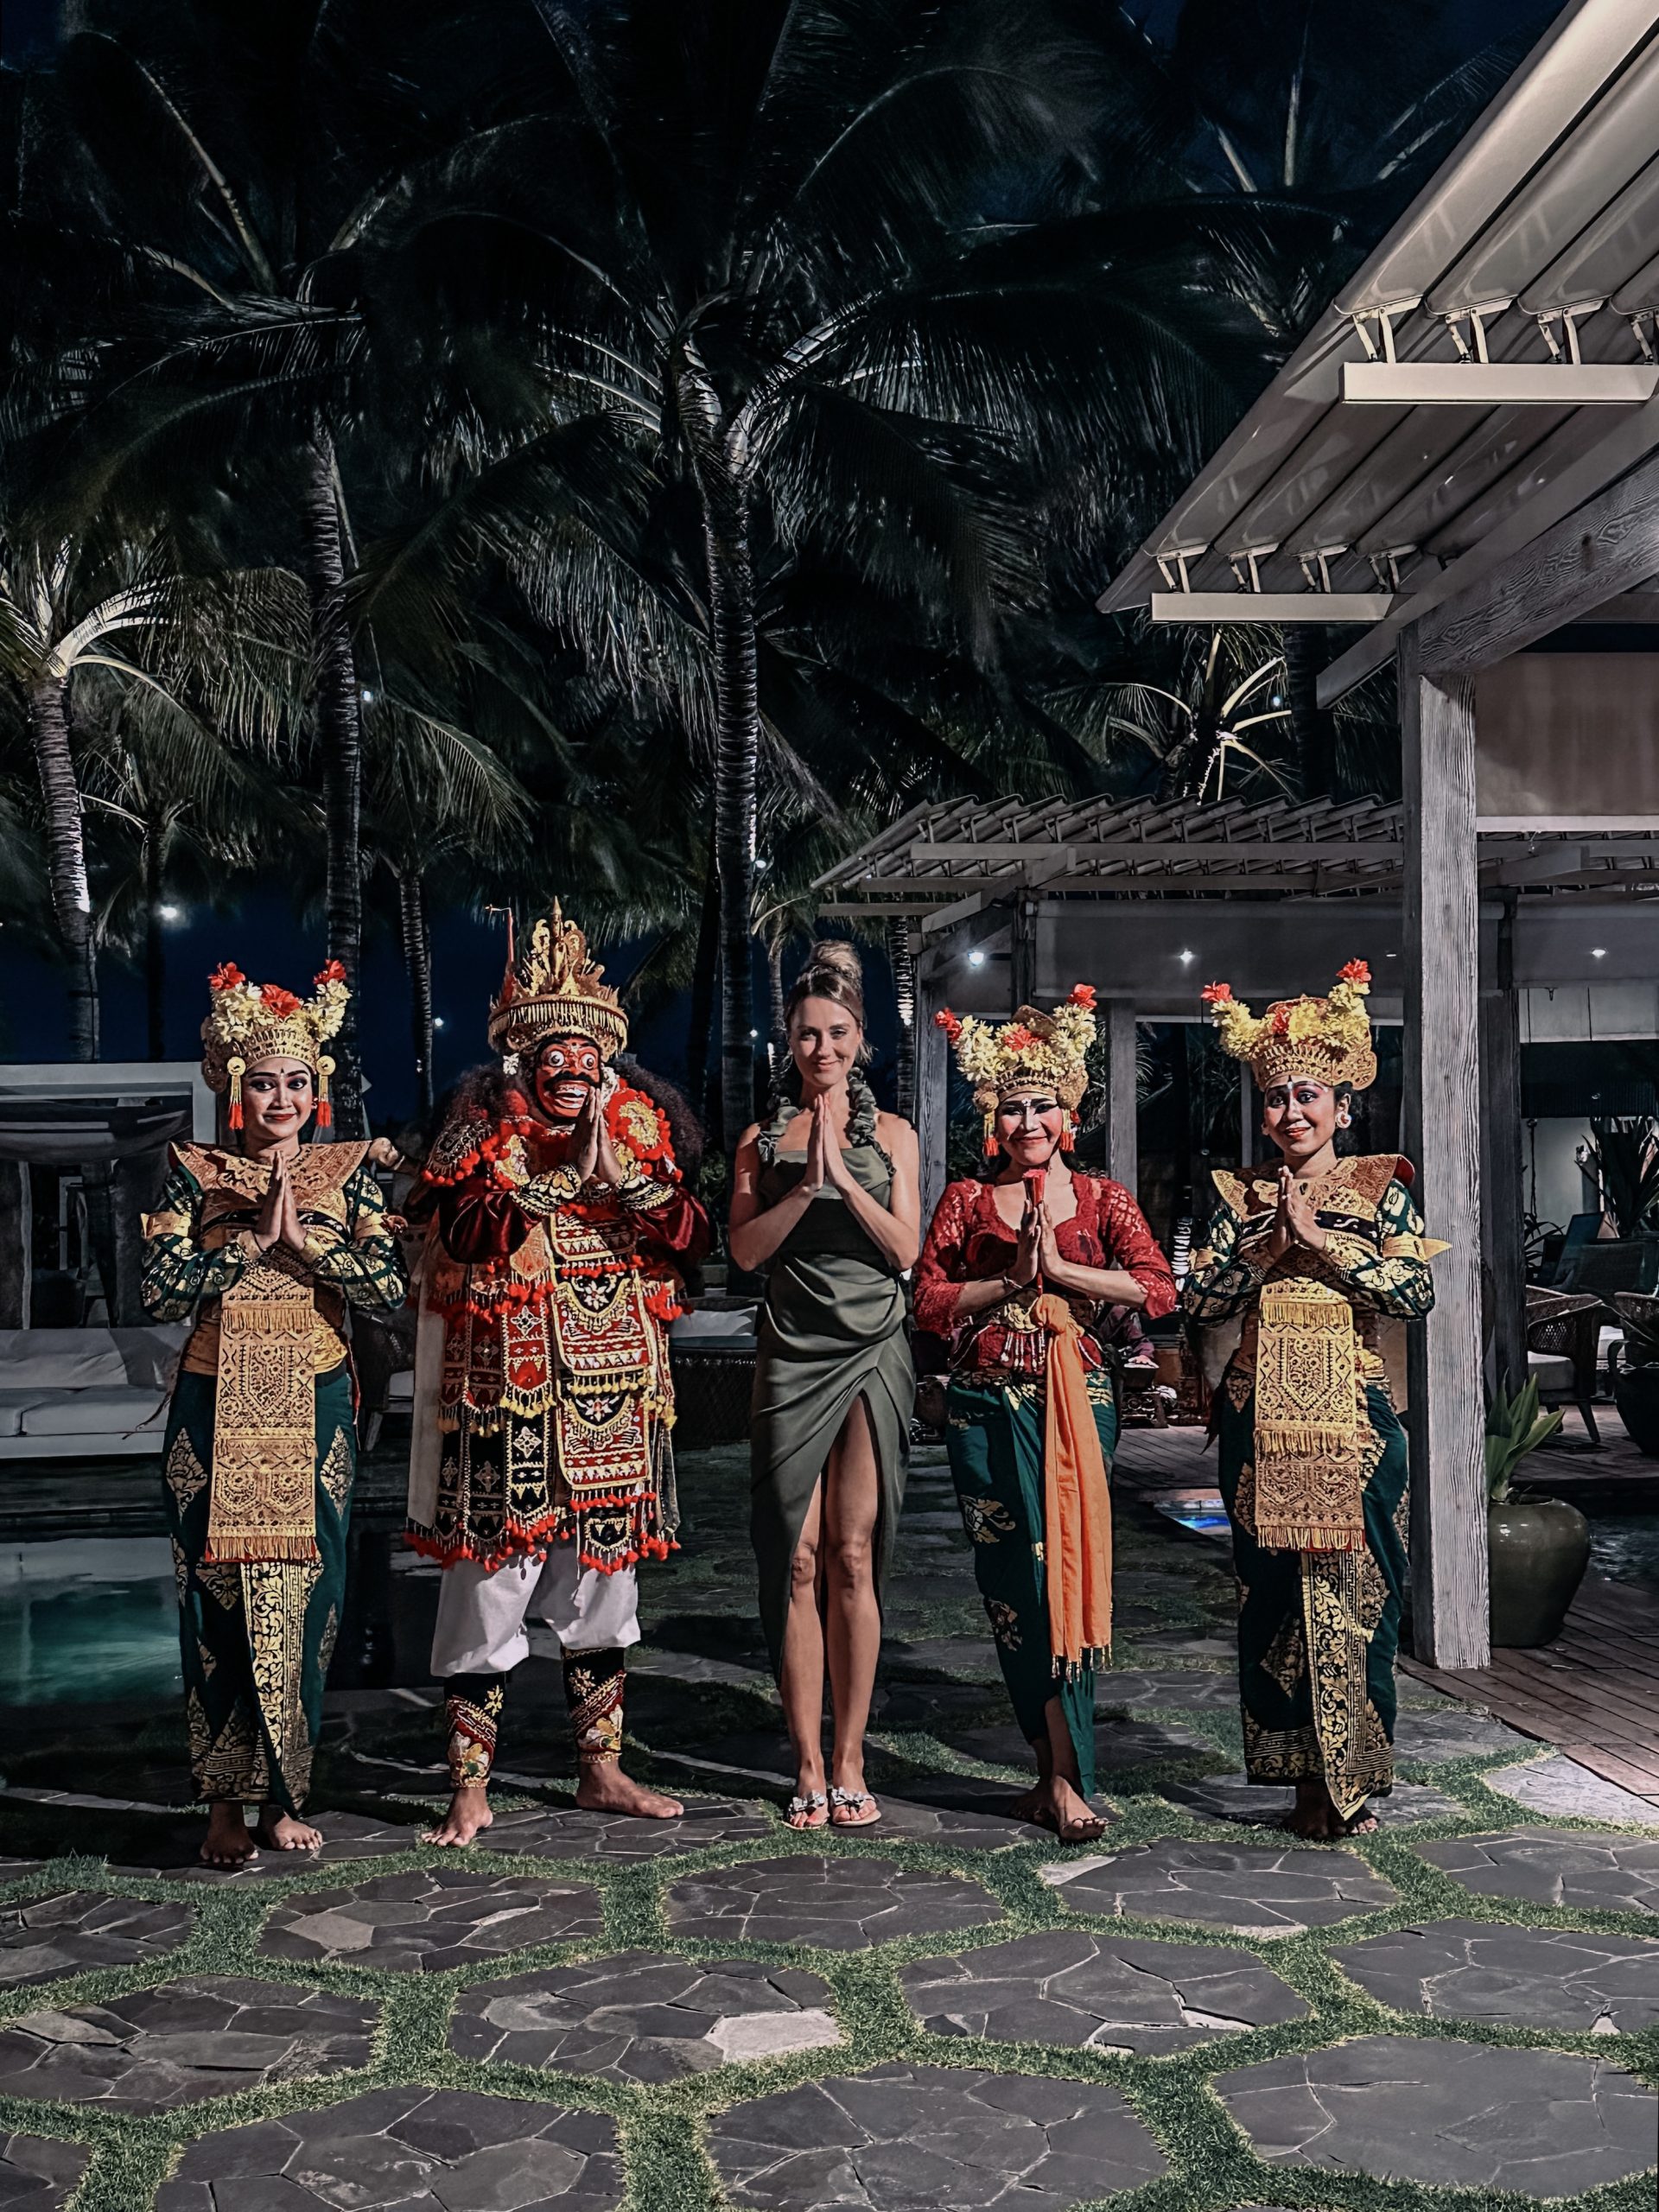 The Royal Purnama Boutique Hotel, Bali, Indonesia